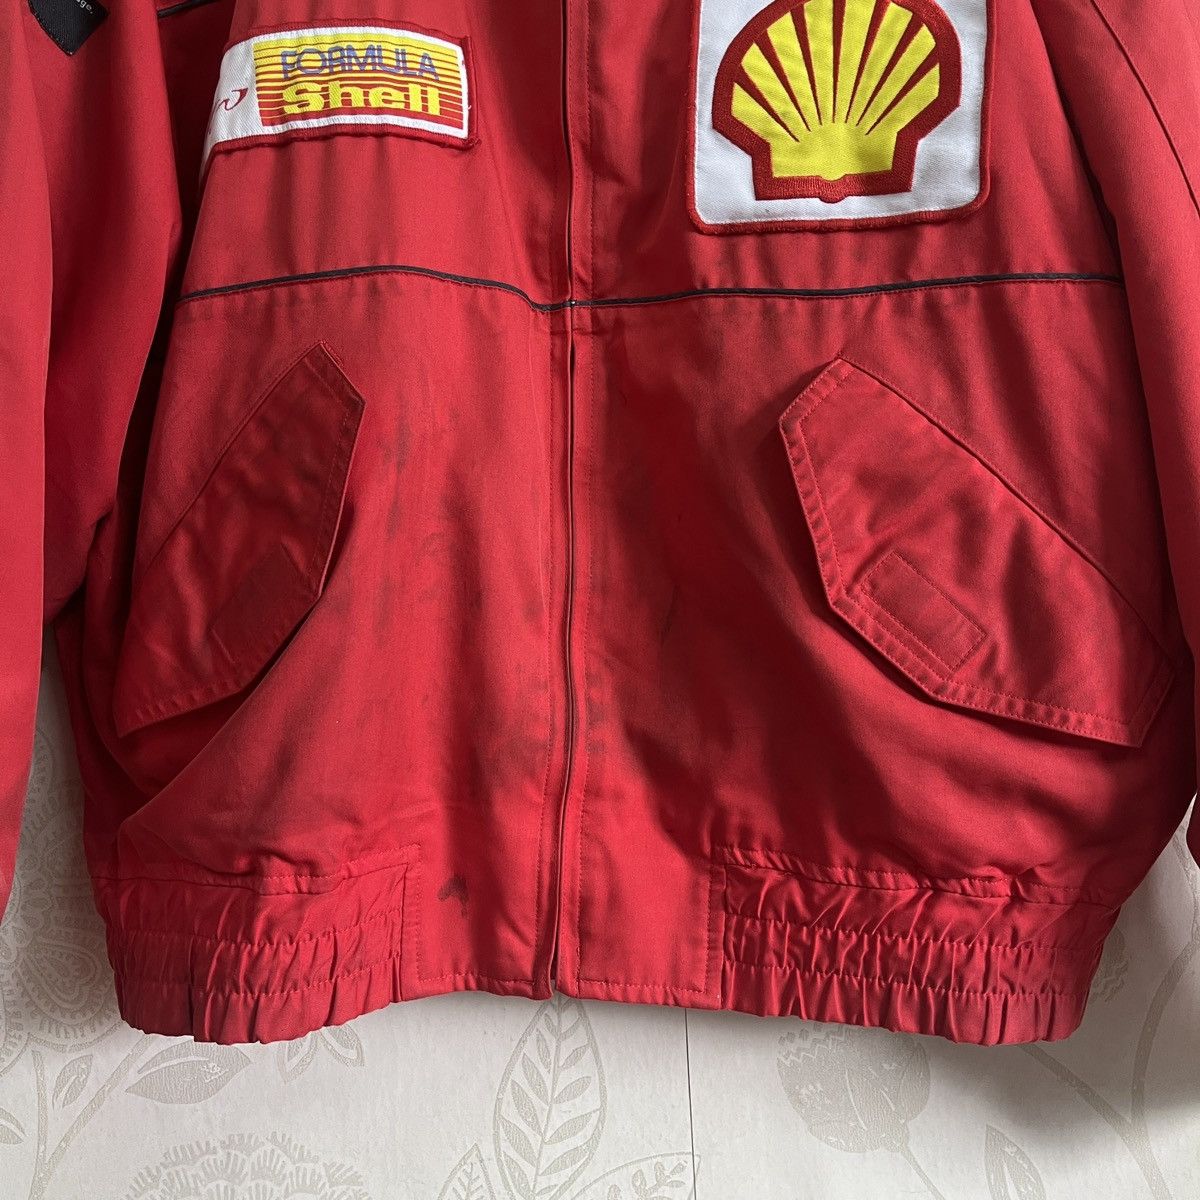 Vintage Japan Formula 1 Shell Workers Dirty Bomber Jacket - 9